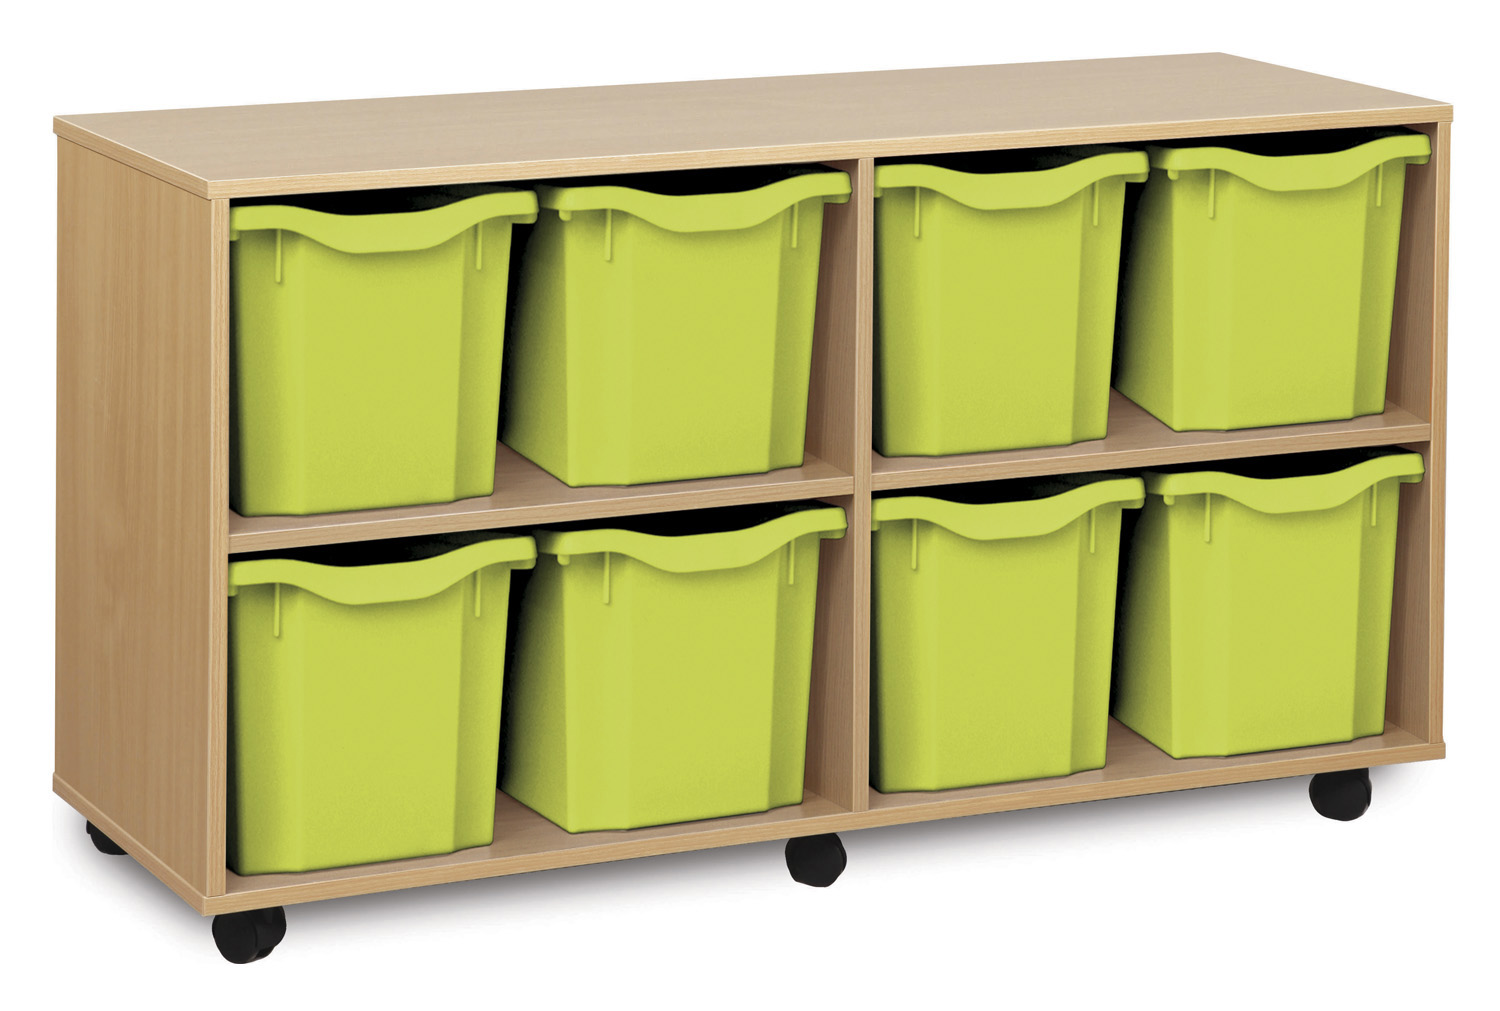 8 Jumbo Classroom Tray Storage Unit, Lime Classroom Trays